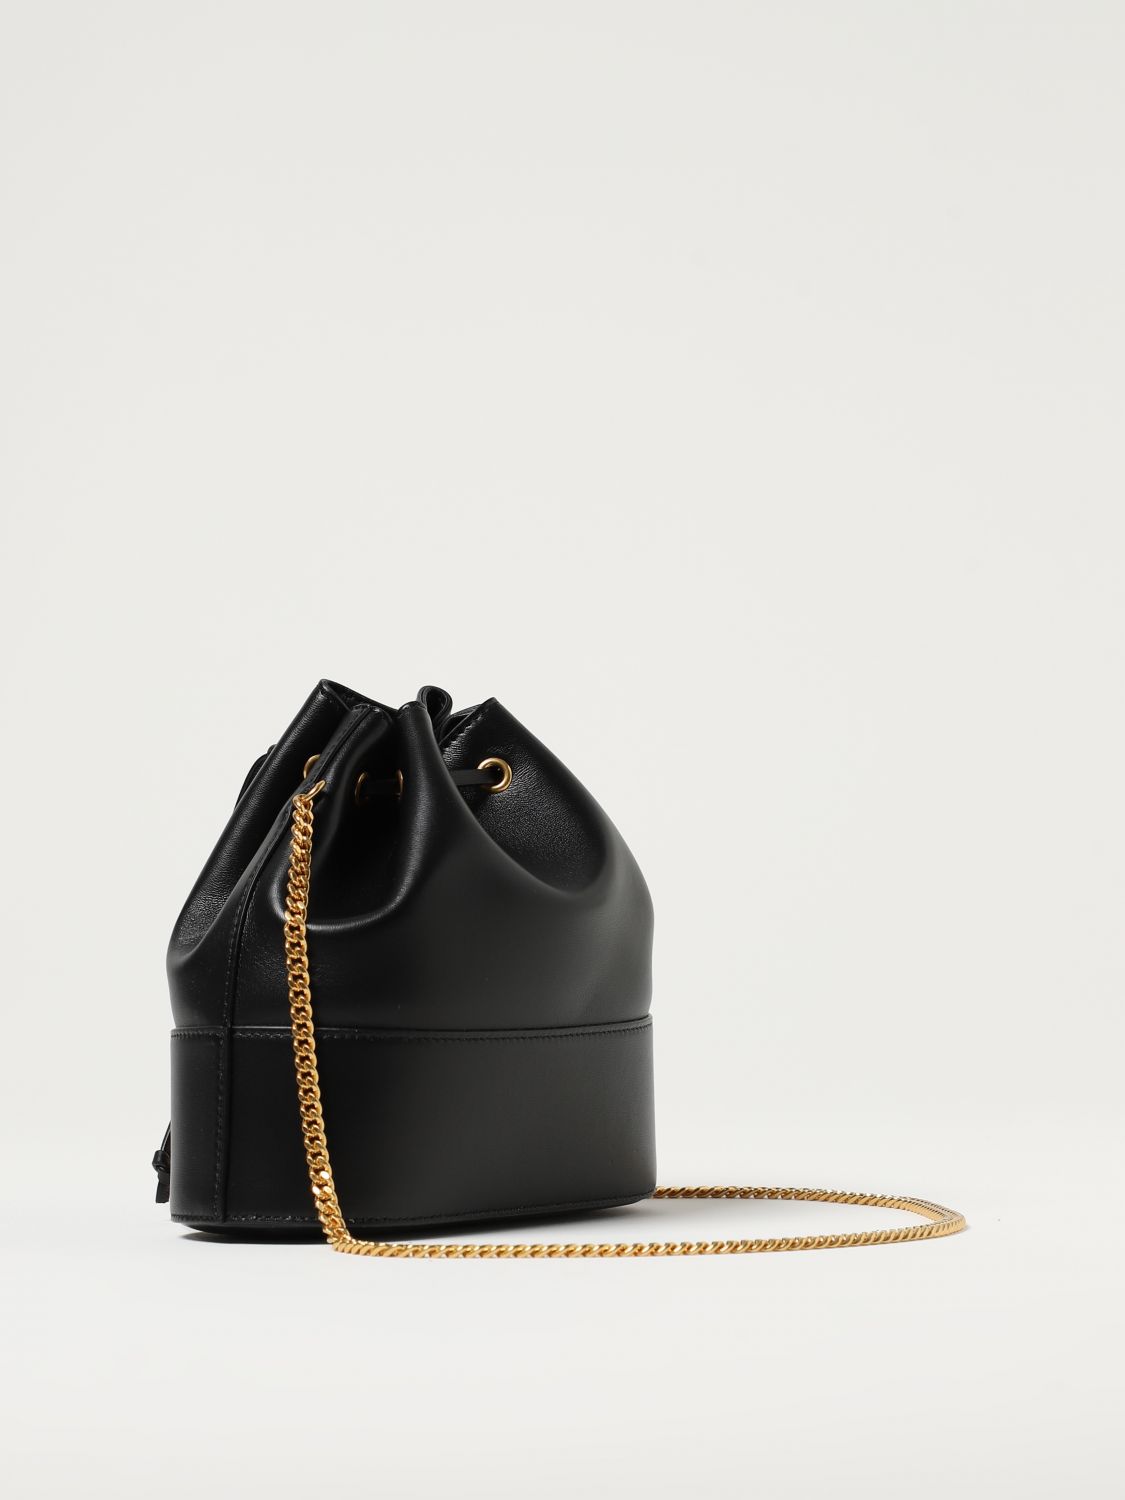 Black V-Logo leather bucket bag, Valentino Garavani